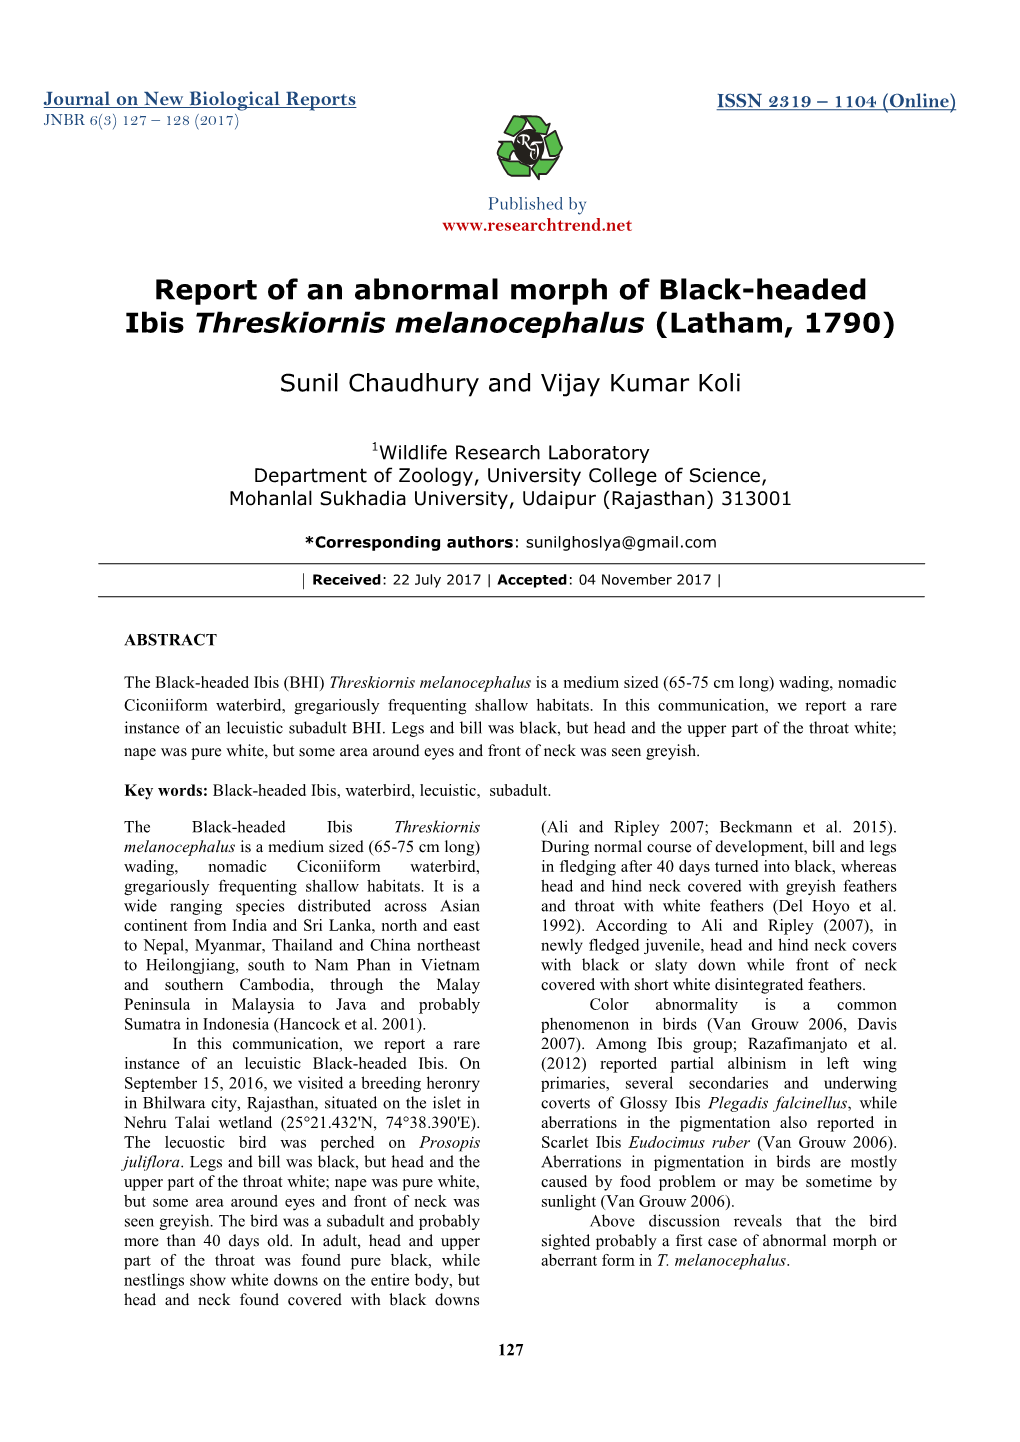 Report of an Abnormal Morph of Black-Headed Ibis Threskiornis Melanocephalus (Latham, 1790)